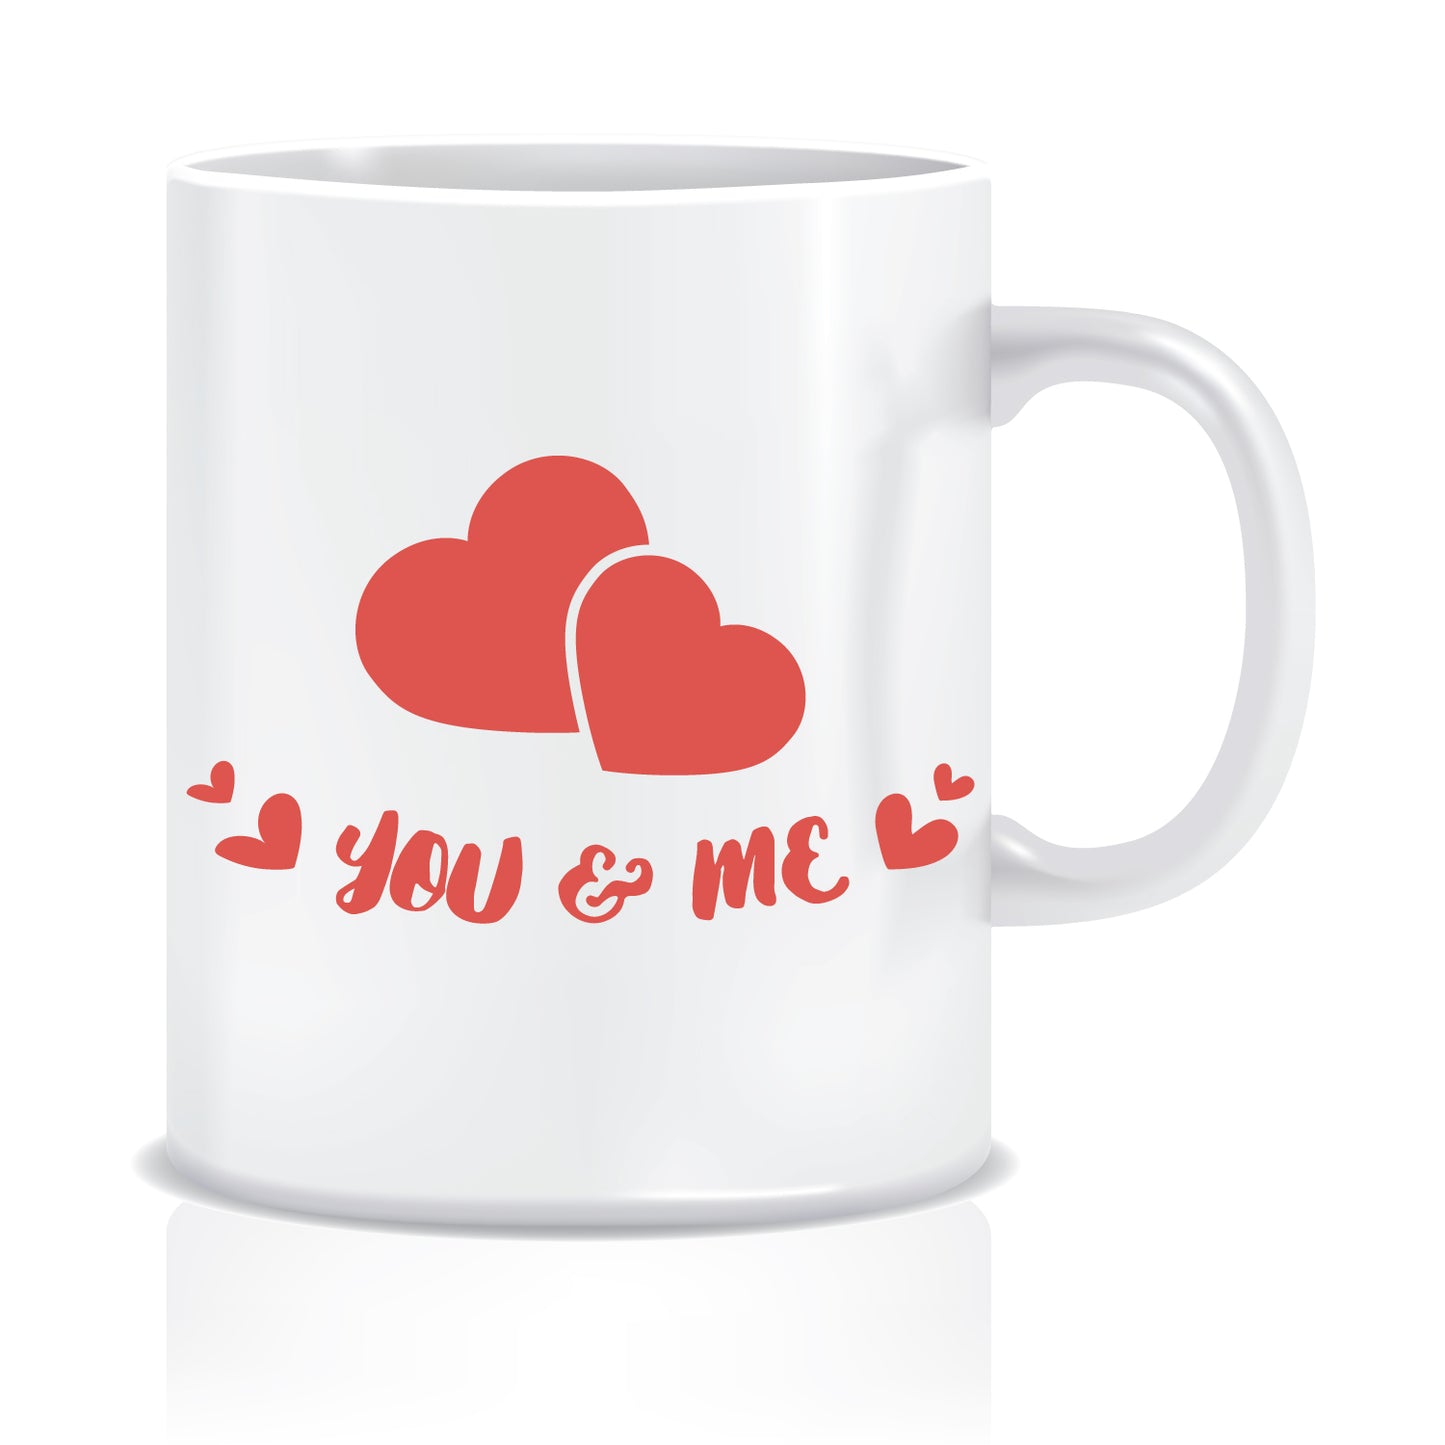 You & Me printed ceramic Coffee Mug | ED364